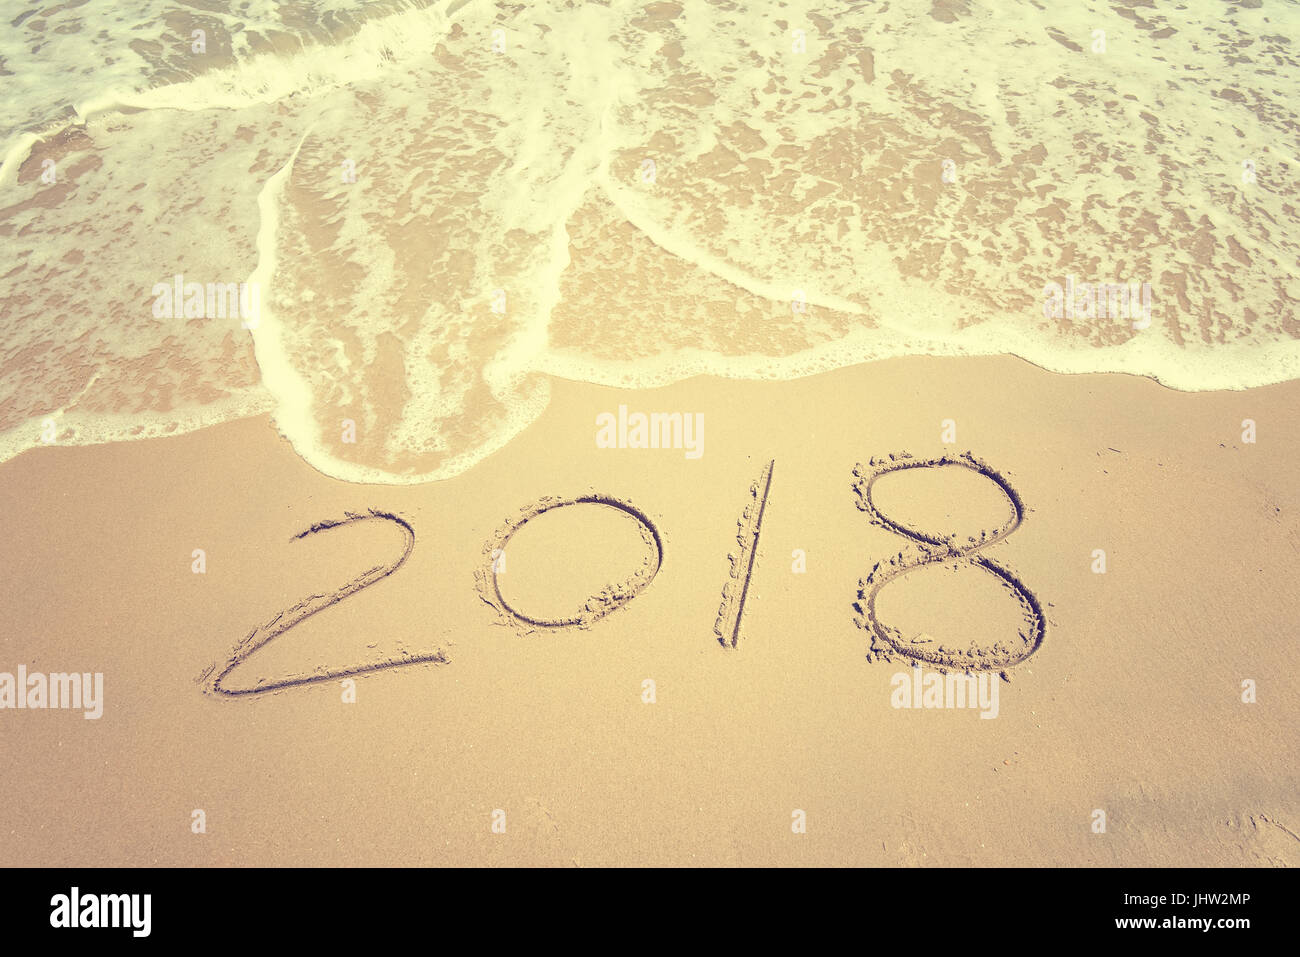 2018 written in sand write on tropical beach Stock Photo